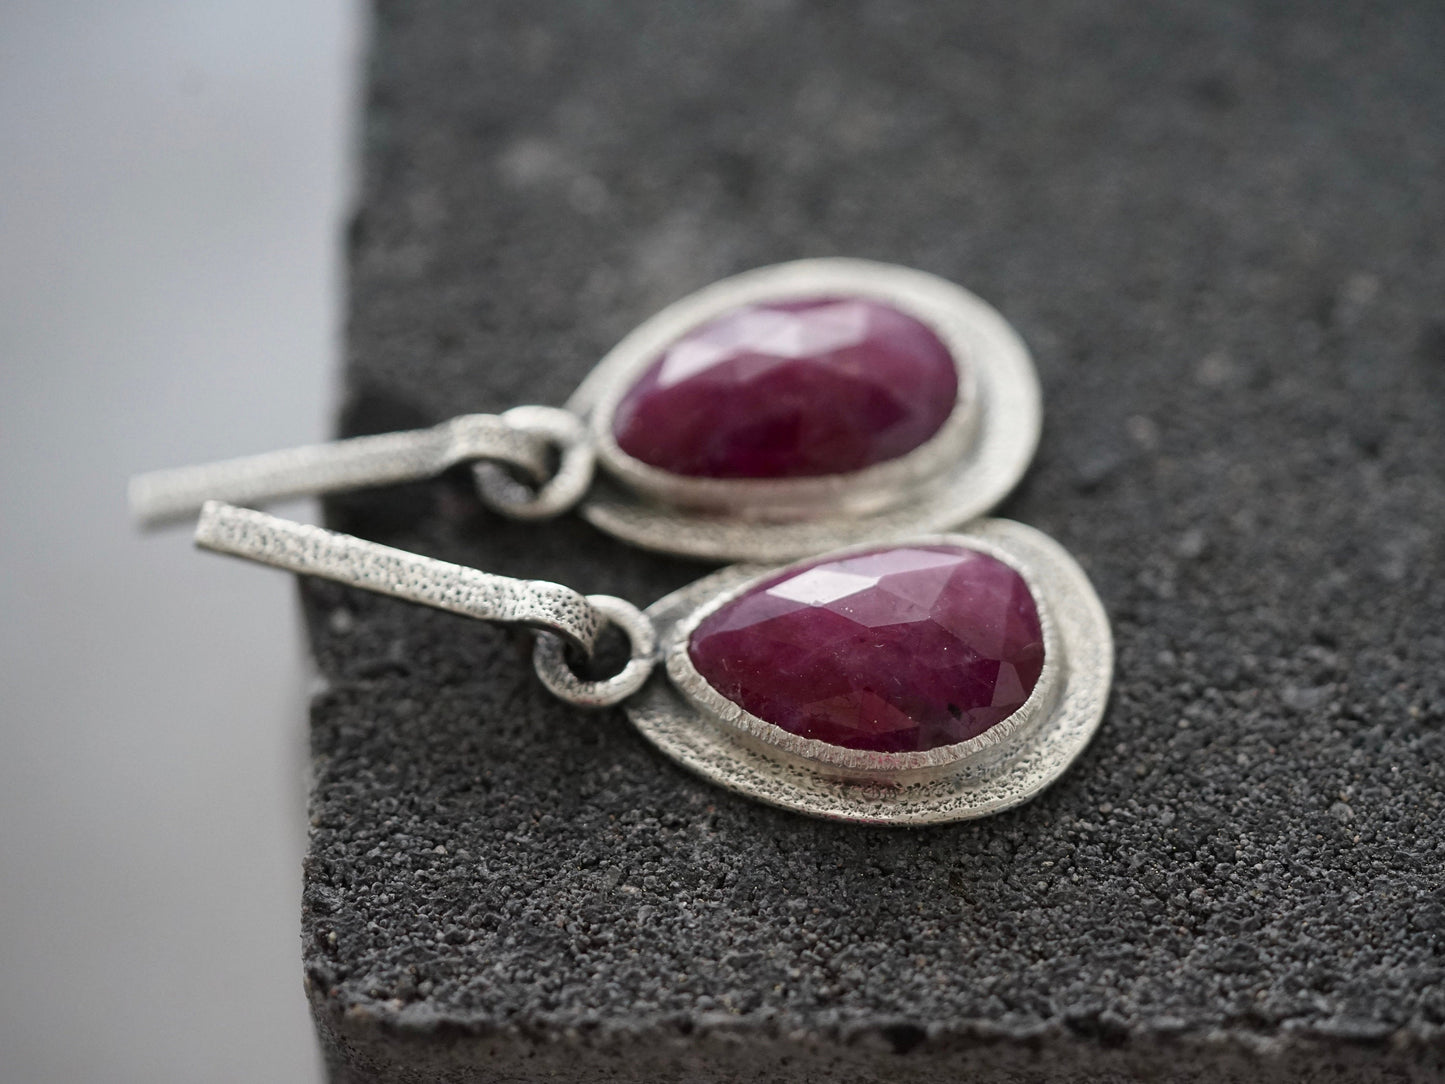 Red sapphire earrings